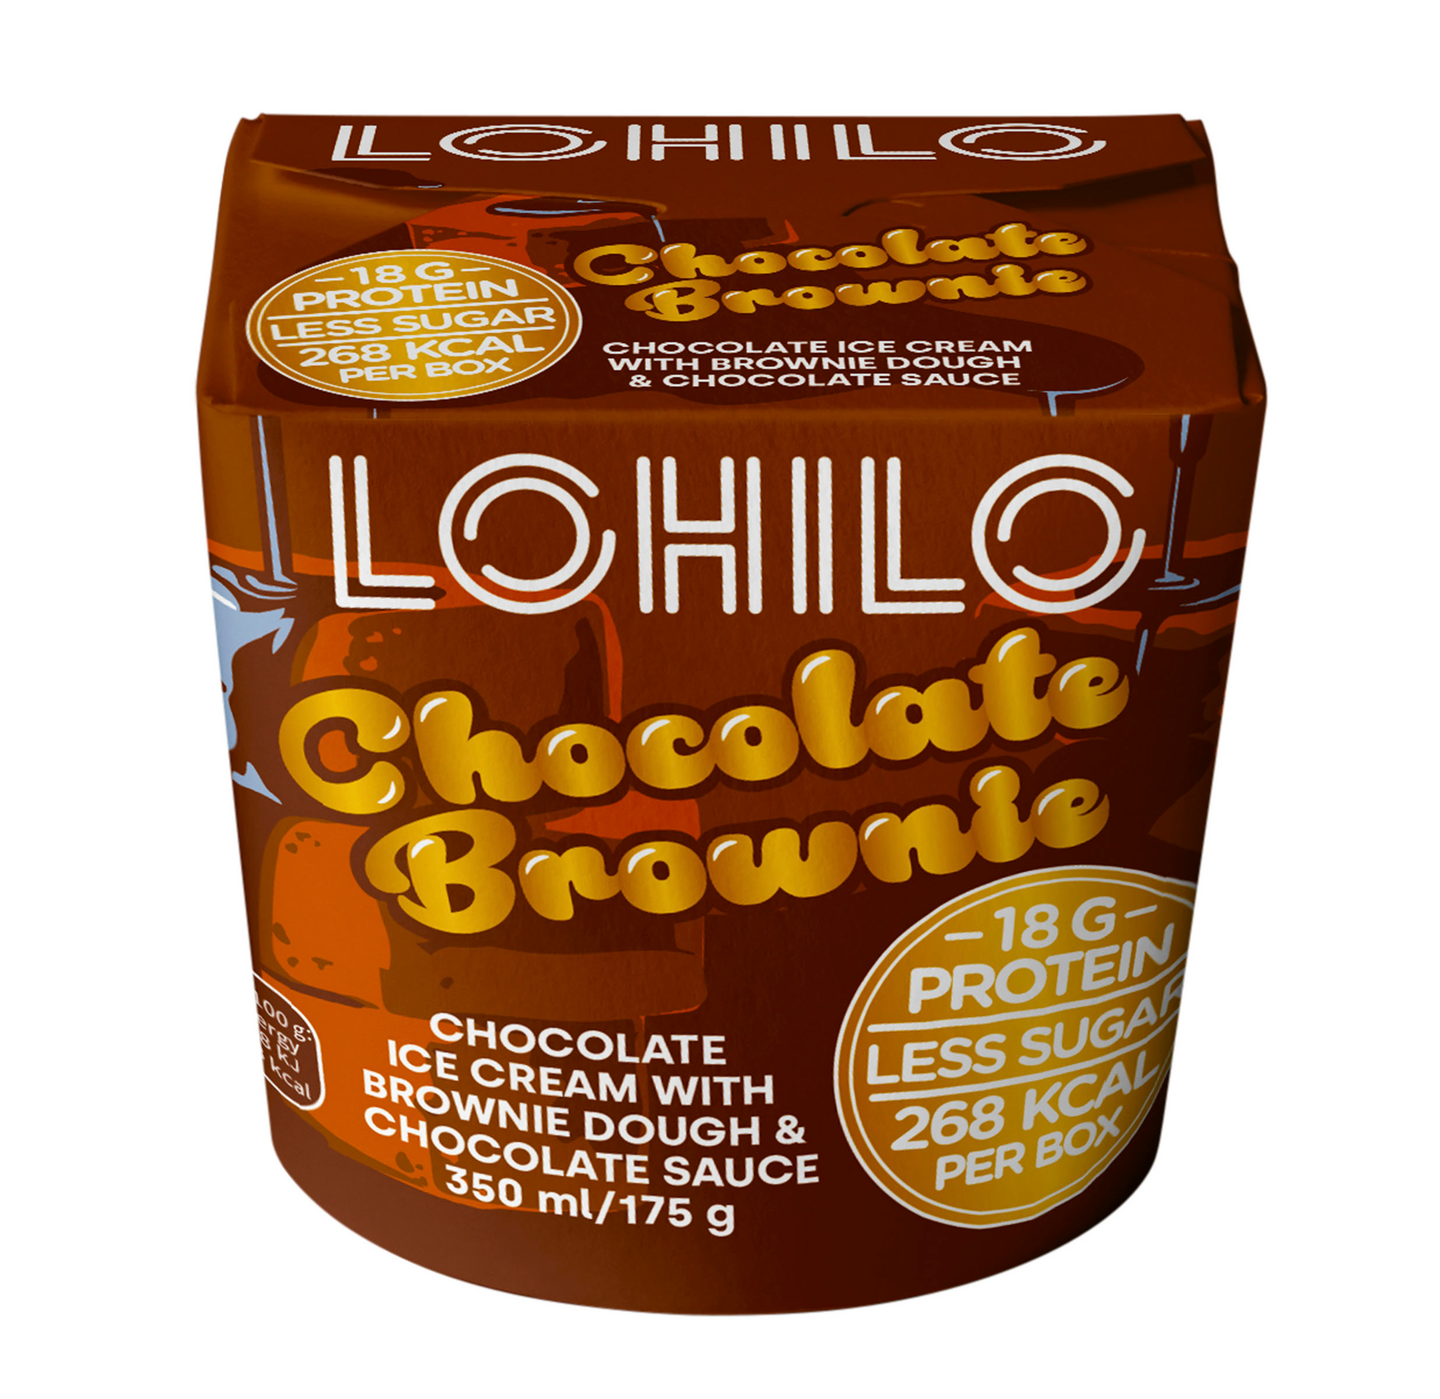 Lohilo proteiini jäätelö chocolate brownei 350 ml